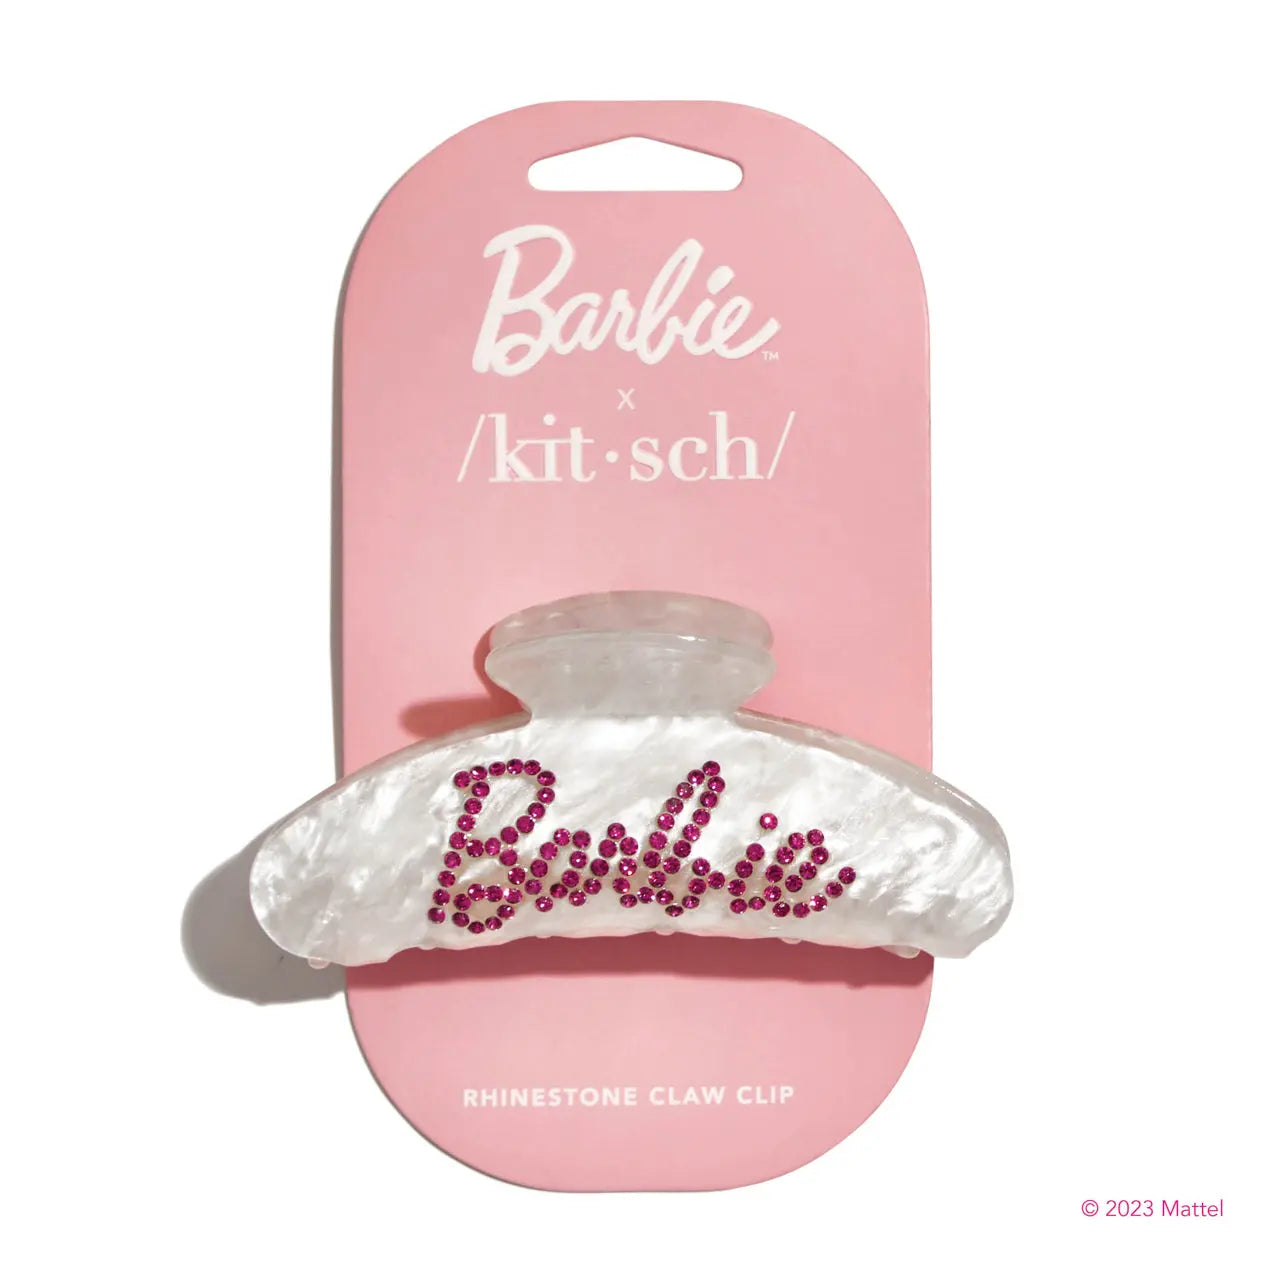 Kitsch - Barbie Rhinestone Claw Clip